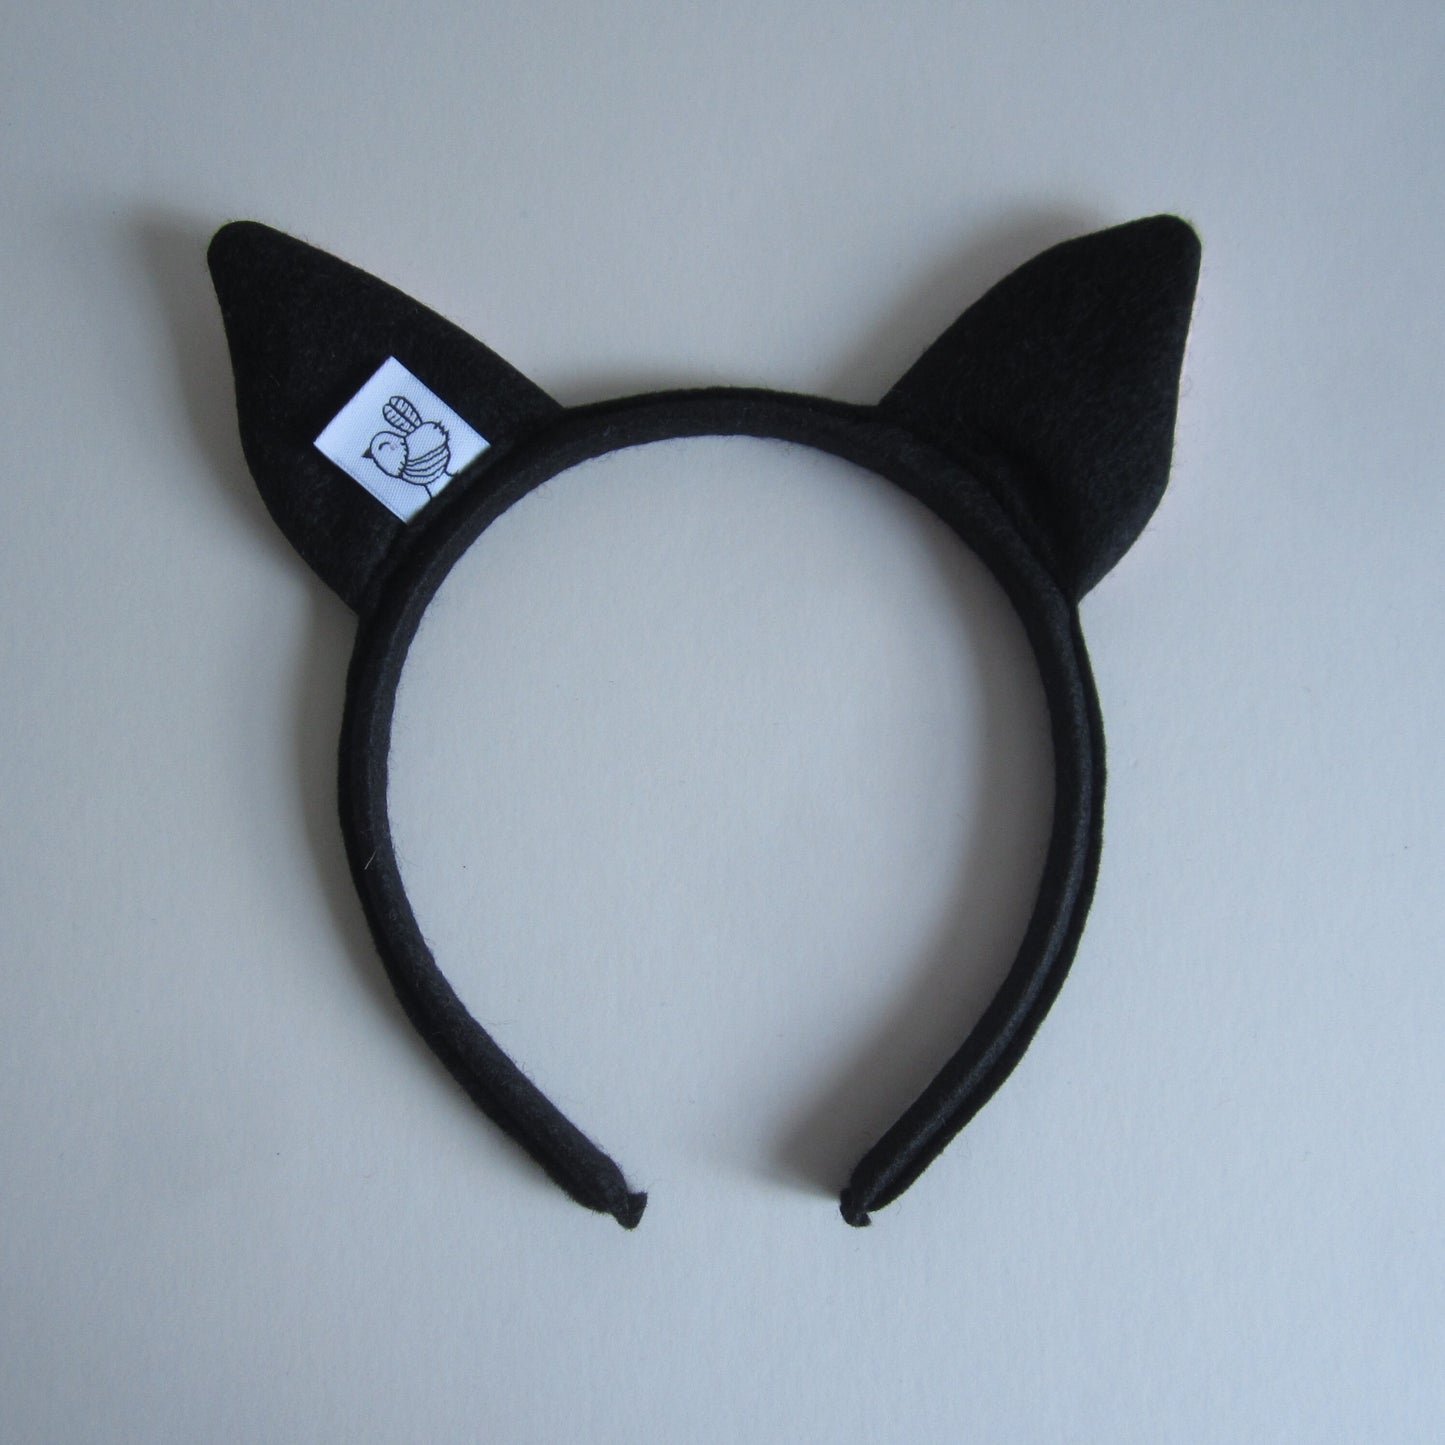 Cat Eared Hairband Made of Black Felt